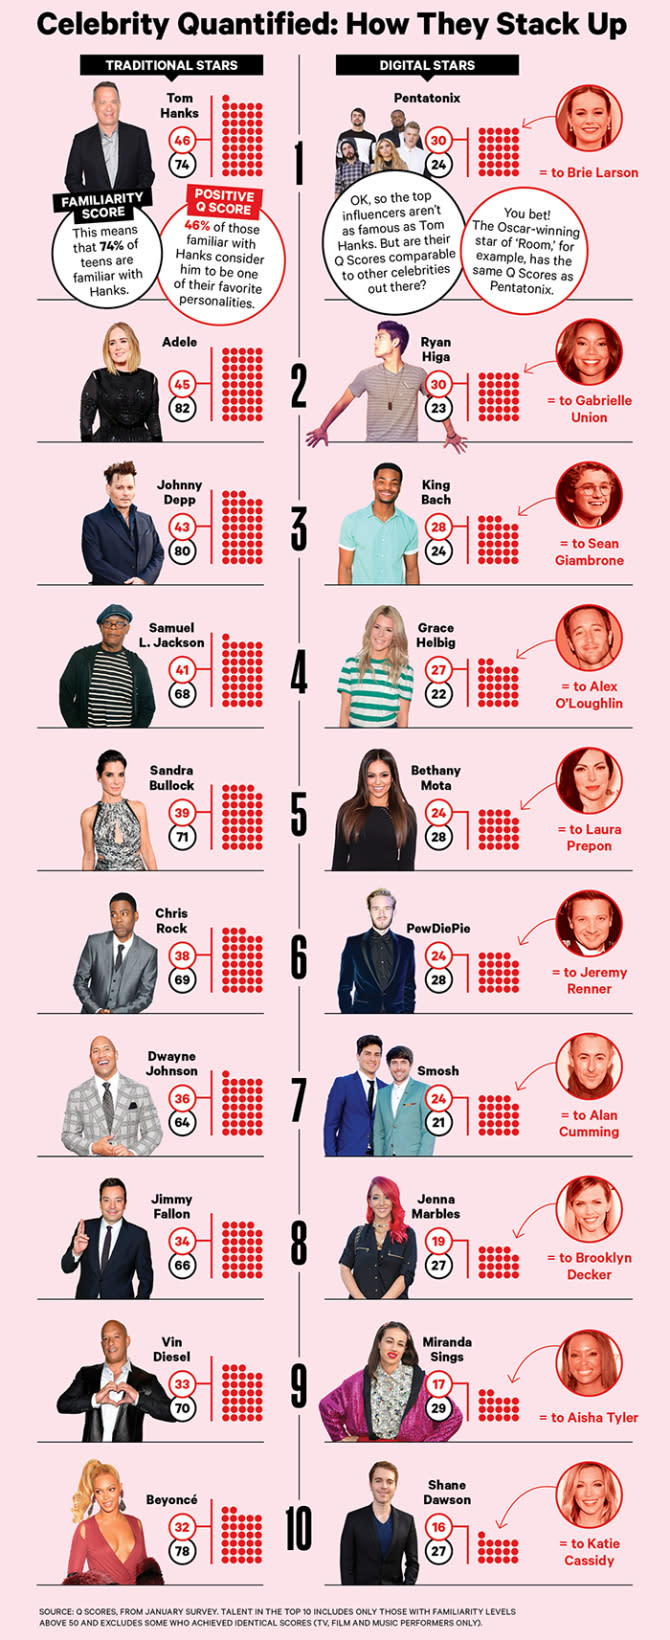 Q Scores Stats Reveal Who’s More Popular: Digital Stars vs. Mainstream